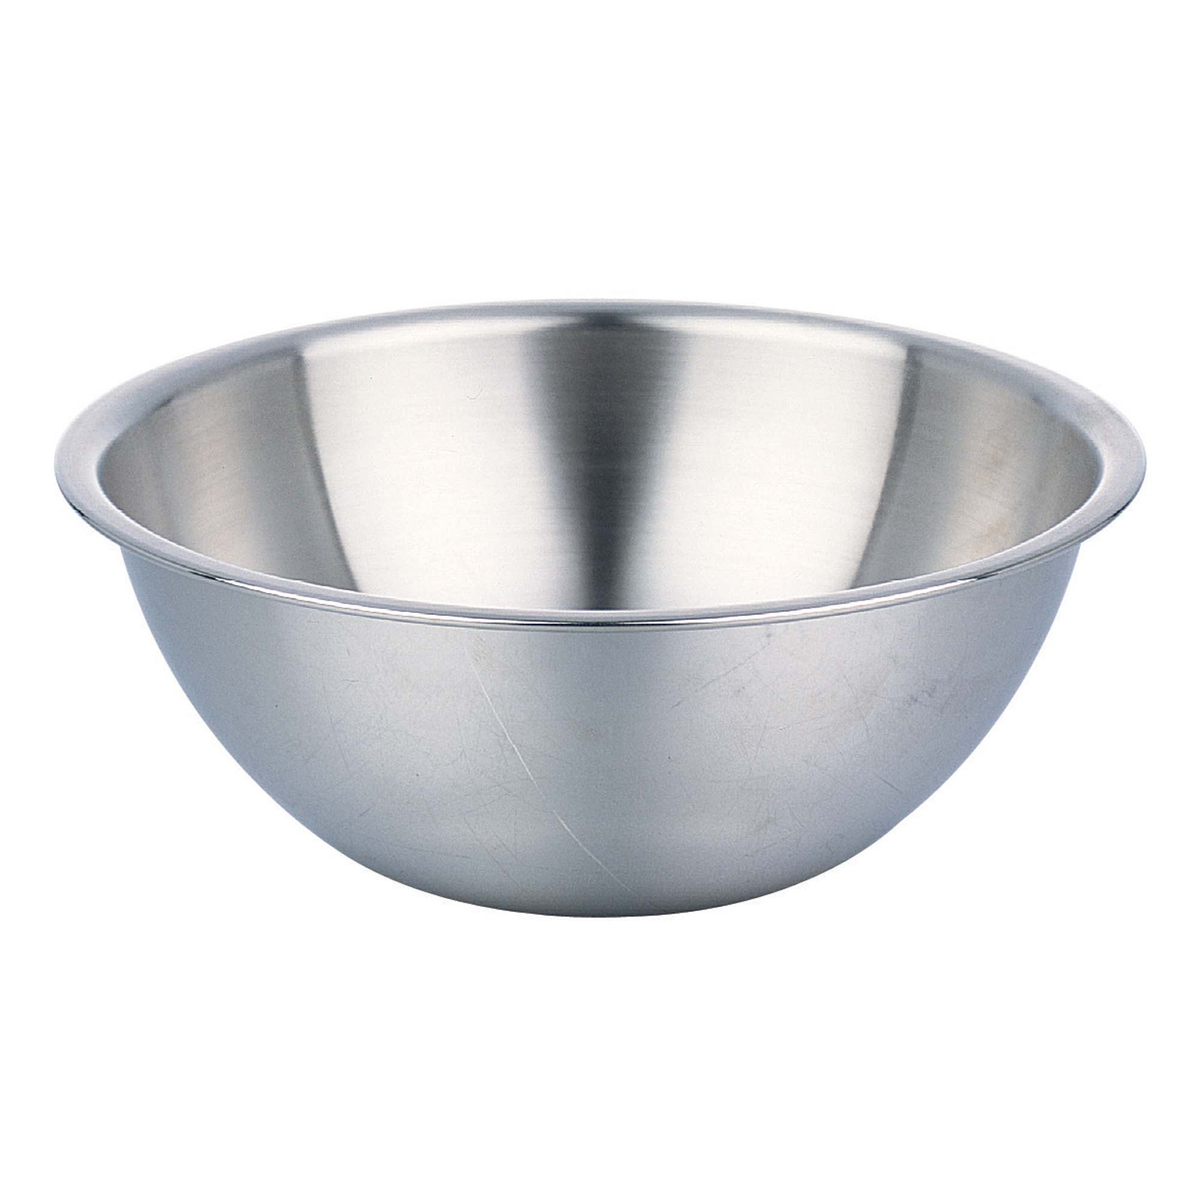 Zebra Stainless Steel Mixing Bowl, 15 cm, 135015